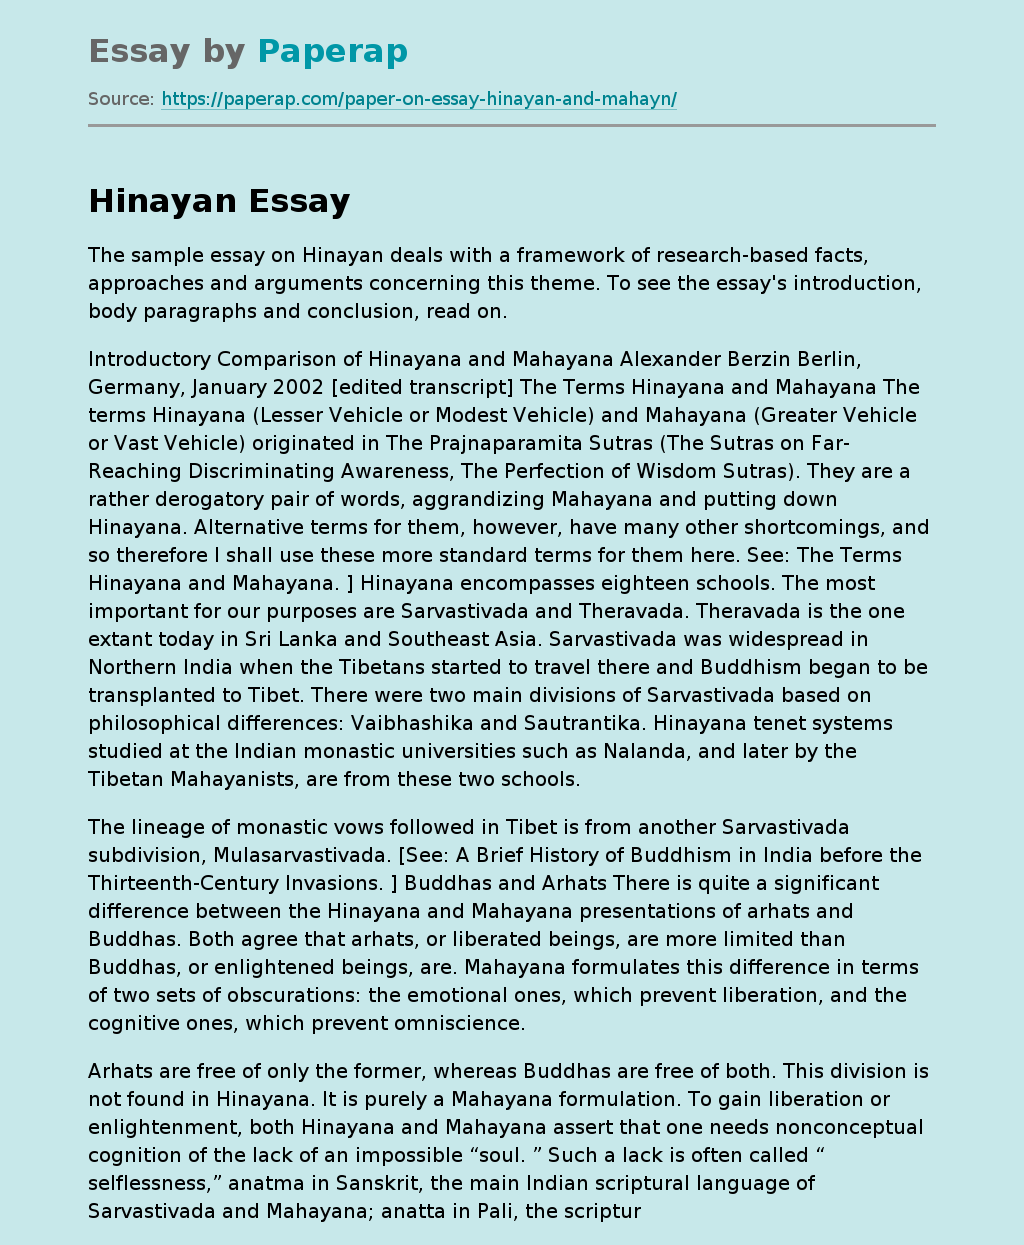 An Introductory Comparison Between Hinayana and Mahayana